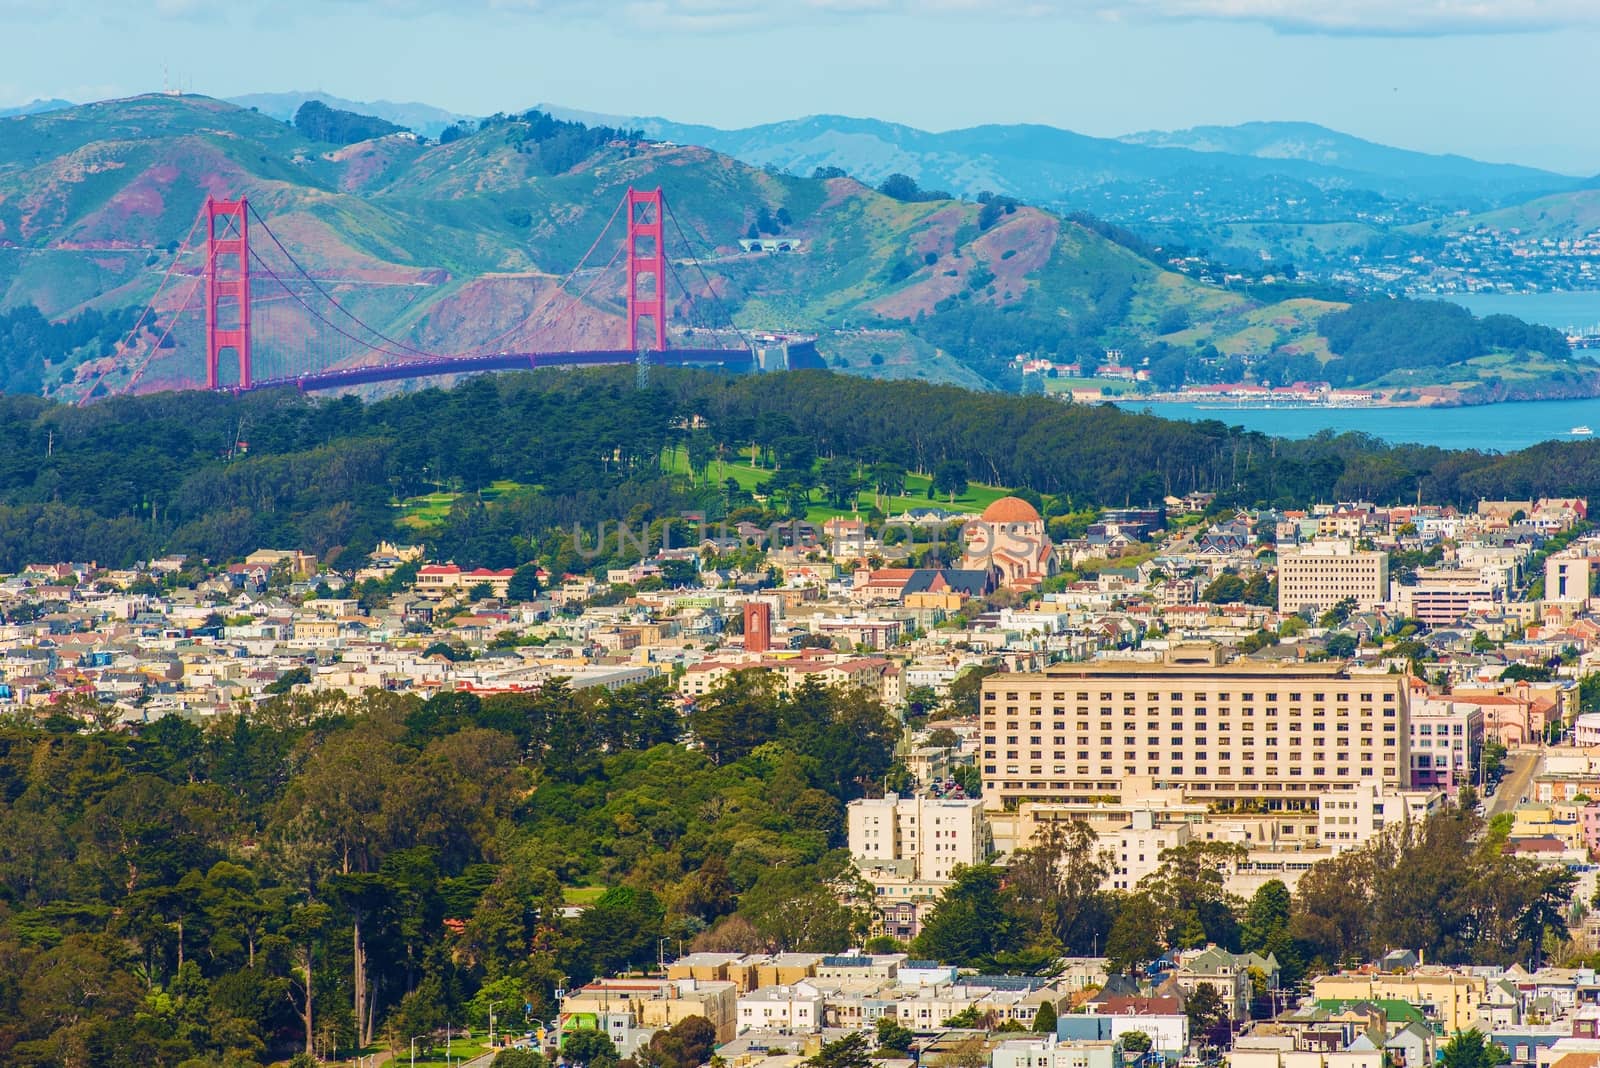 San Francisco Cityscape with Golden Gate Bridge in a Distance. San Francisco, California, United States.